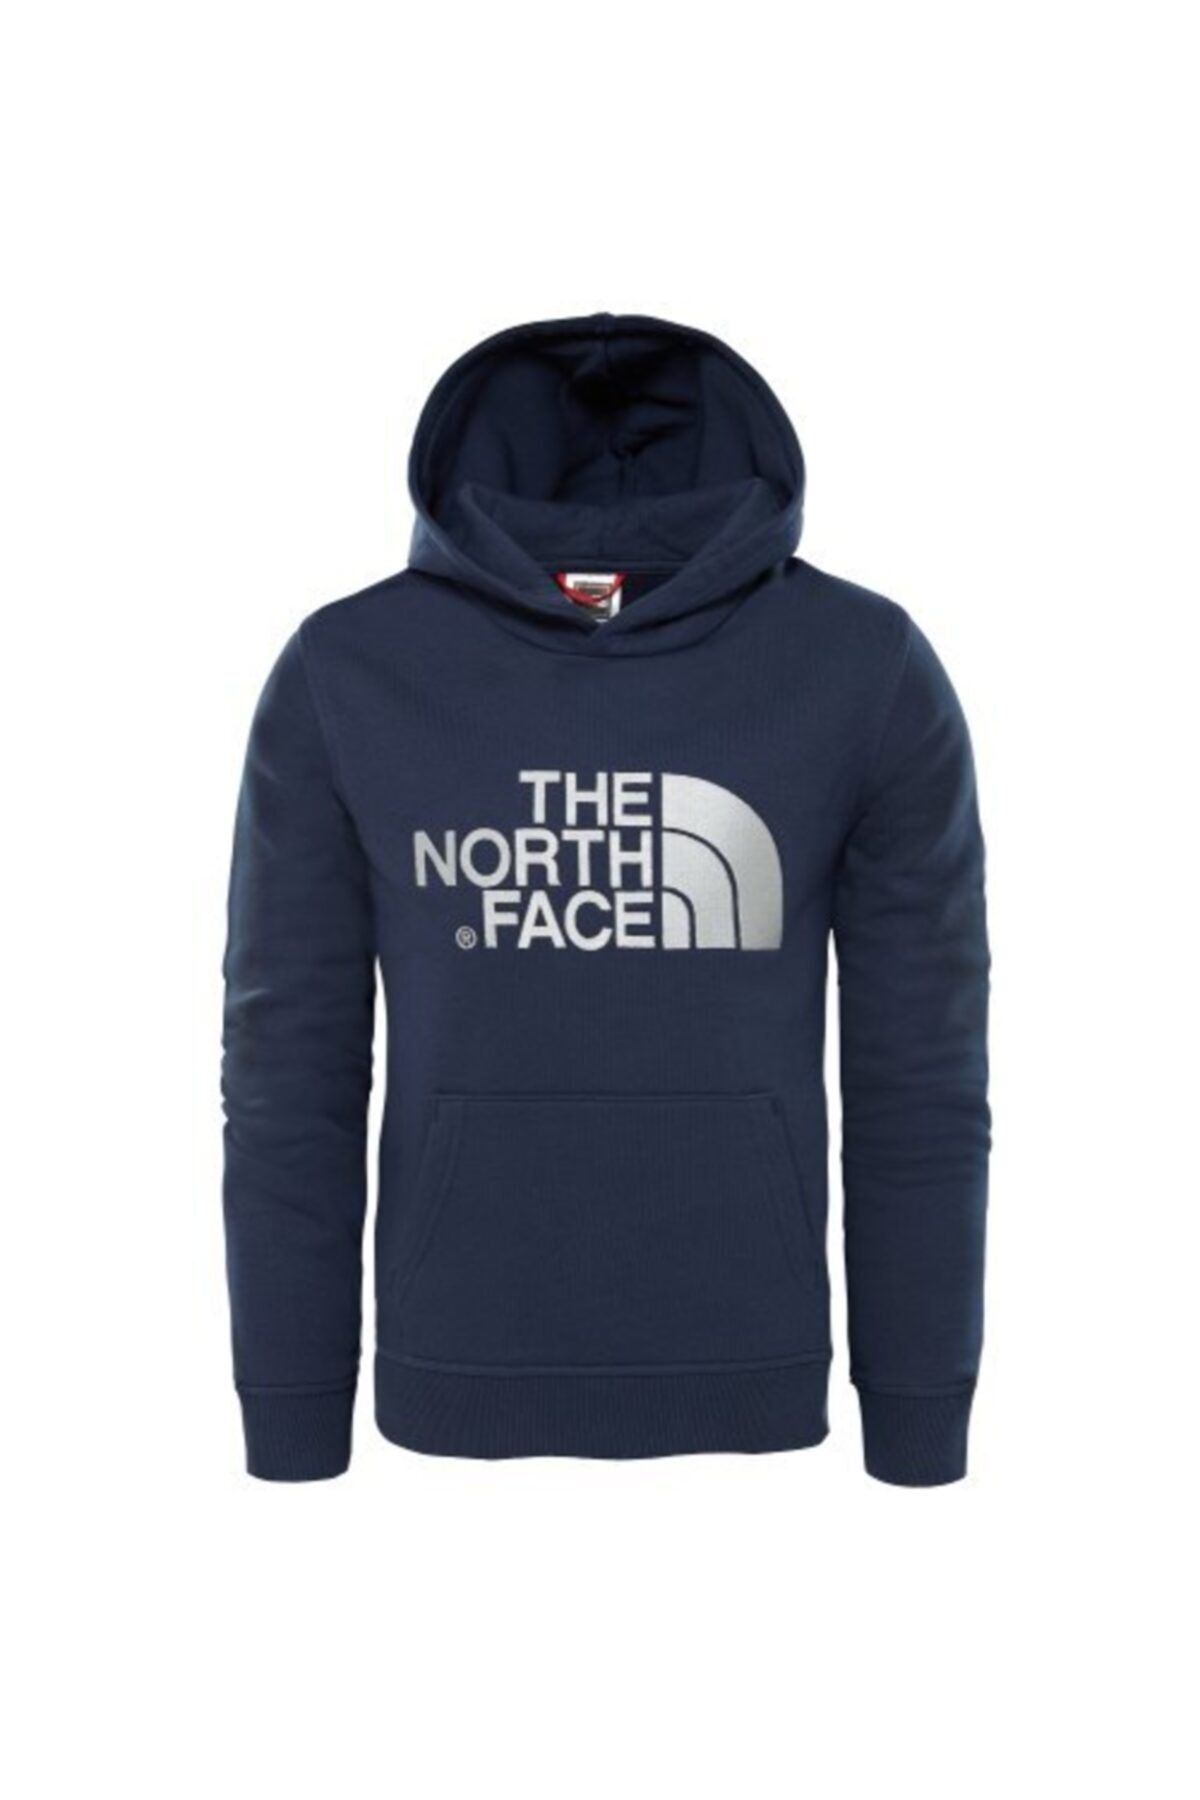 The North Face Crew Overhead Çocuk Sweatshirt